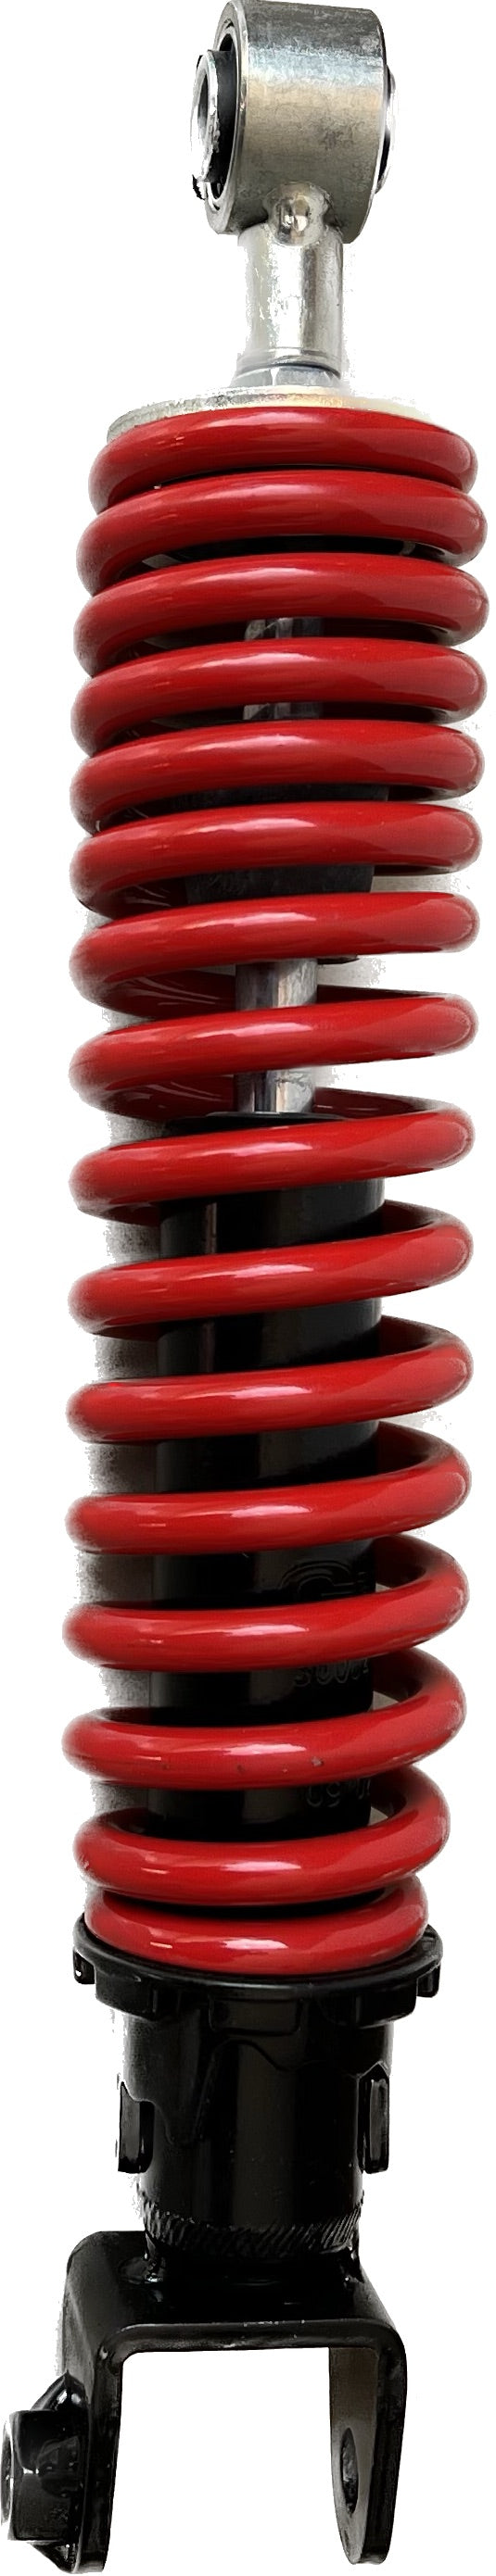 Aprilia Rear shock absorber red SR/STORM 125/150/160